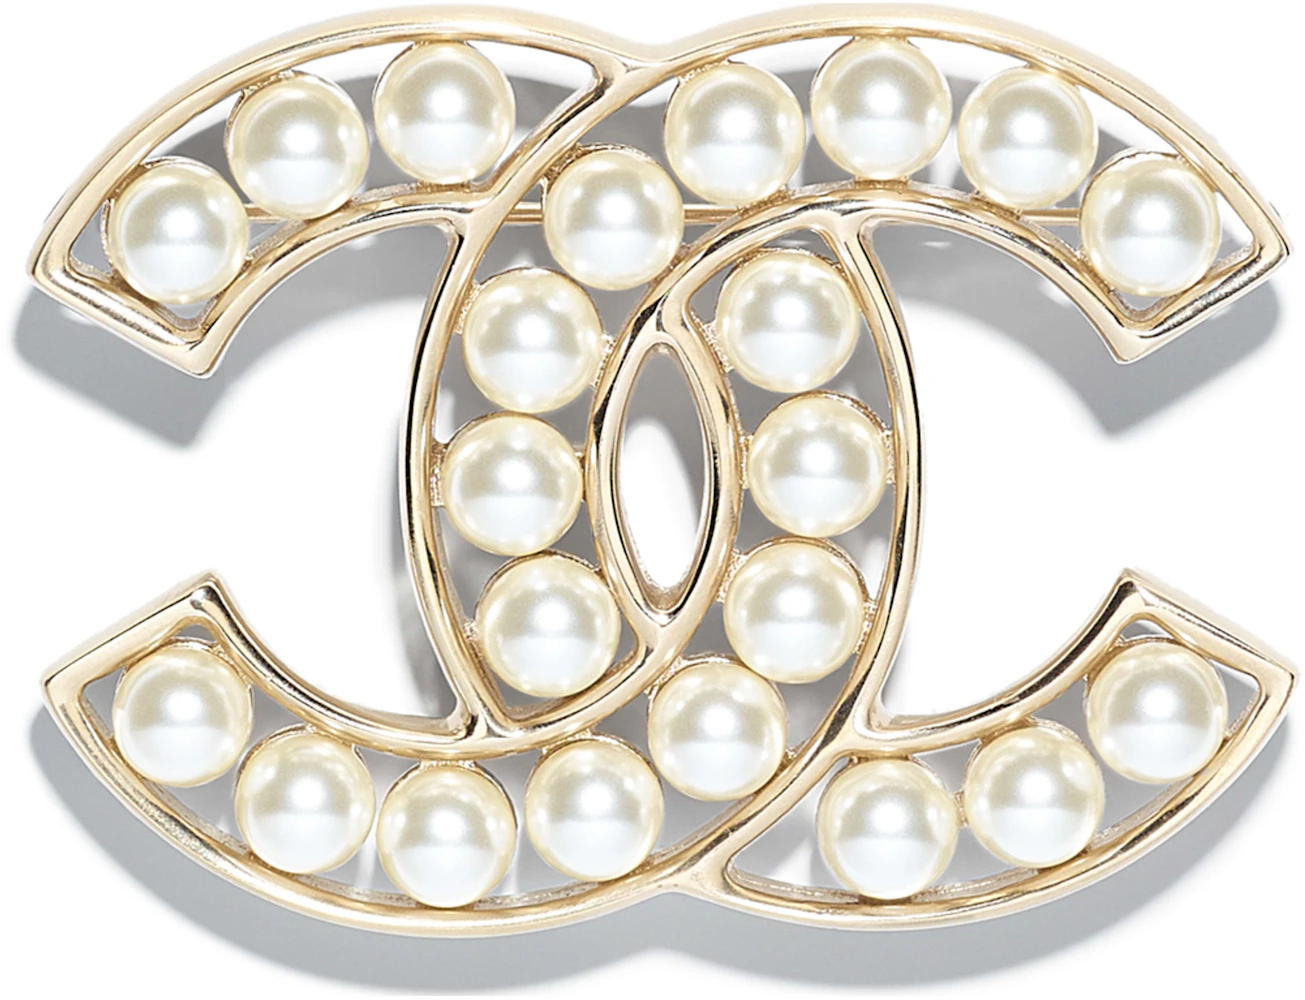 Chanel Pearls Brooch - New!